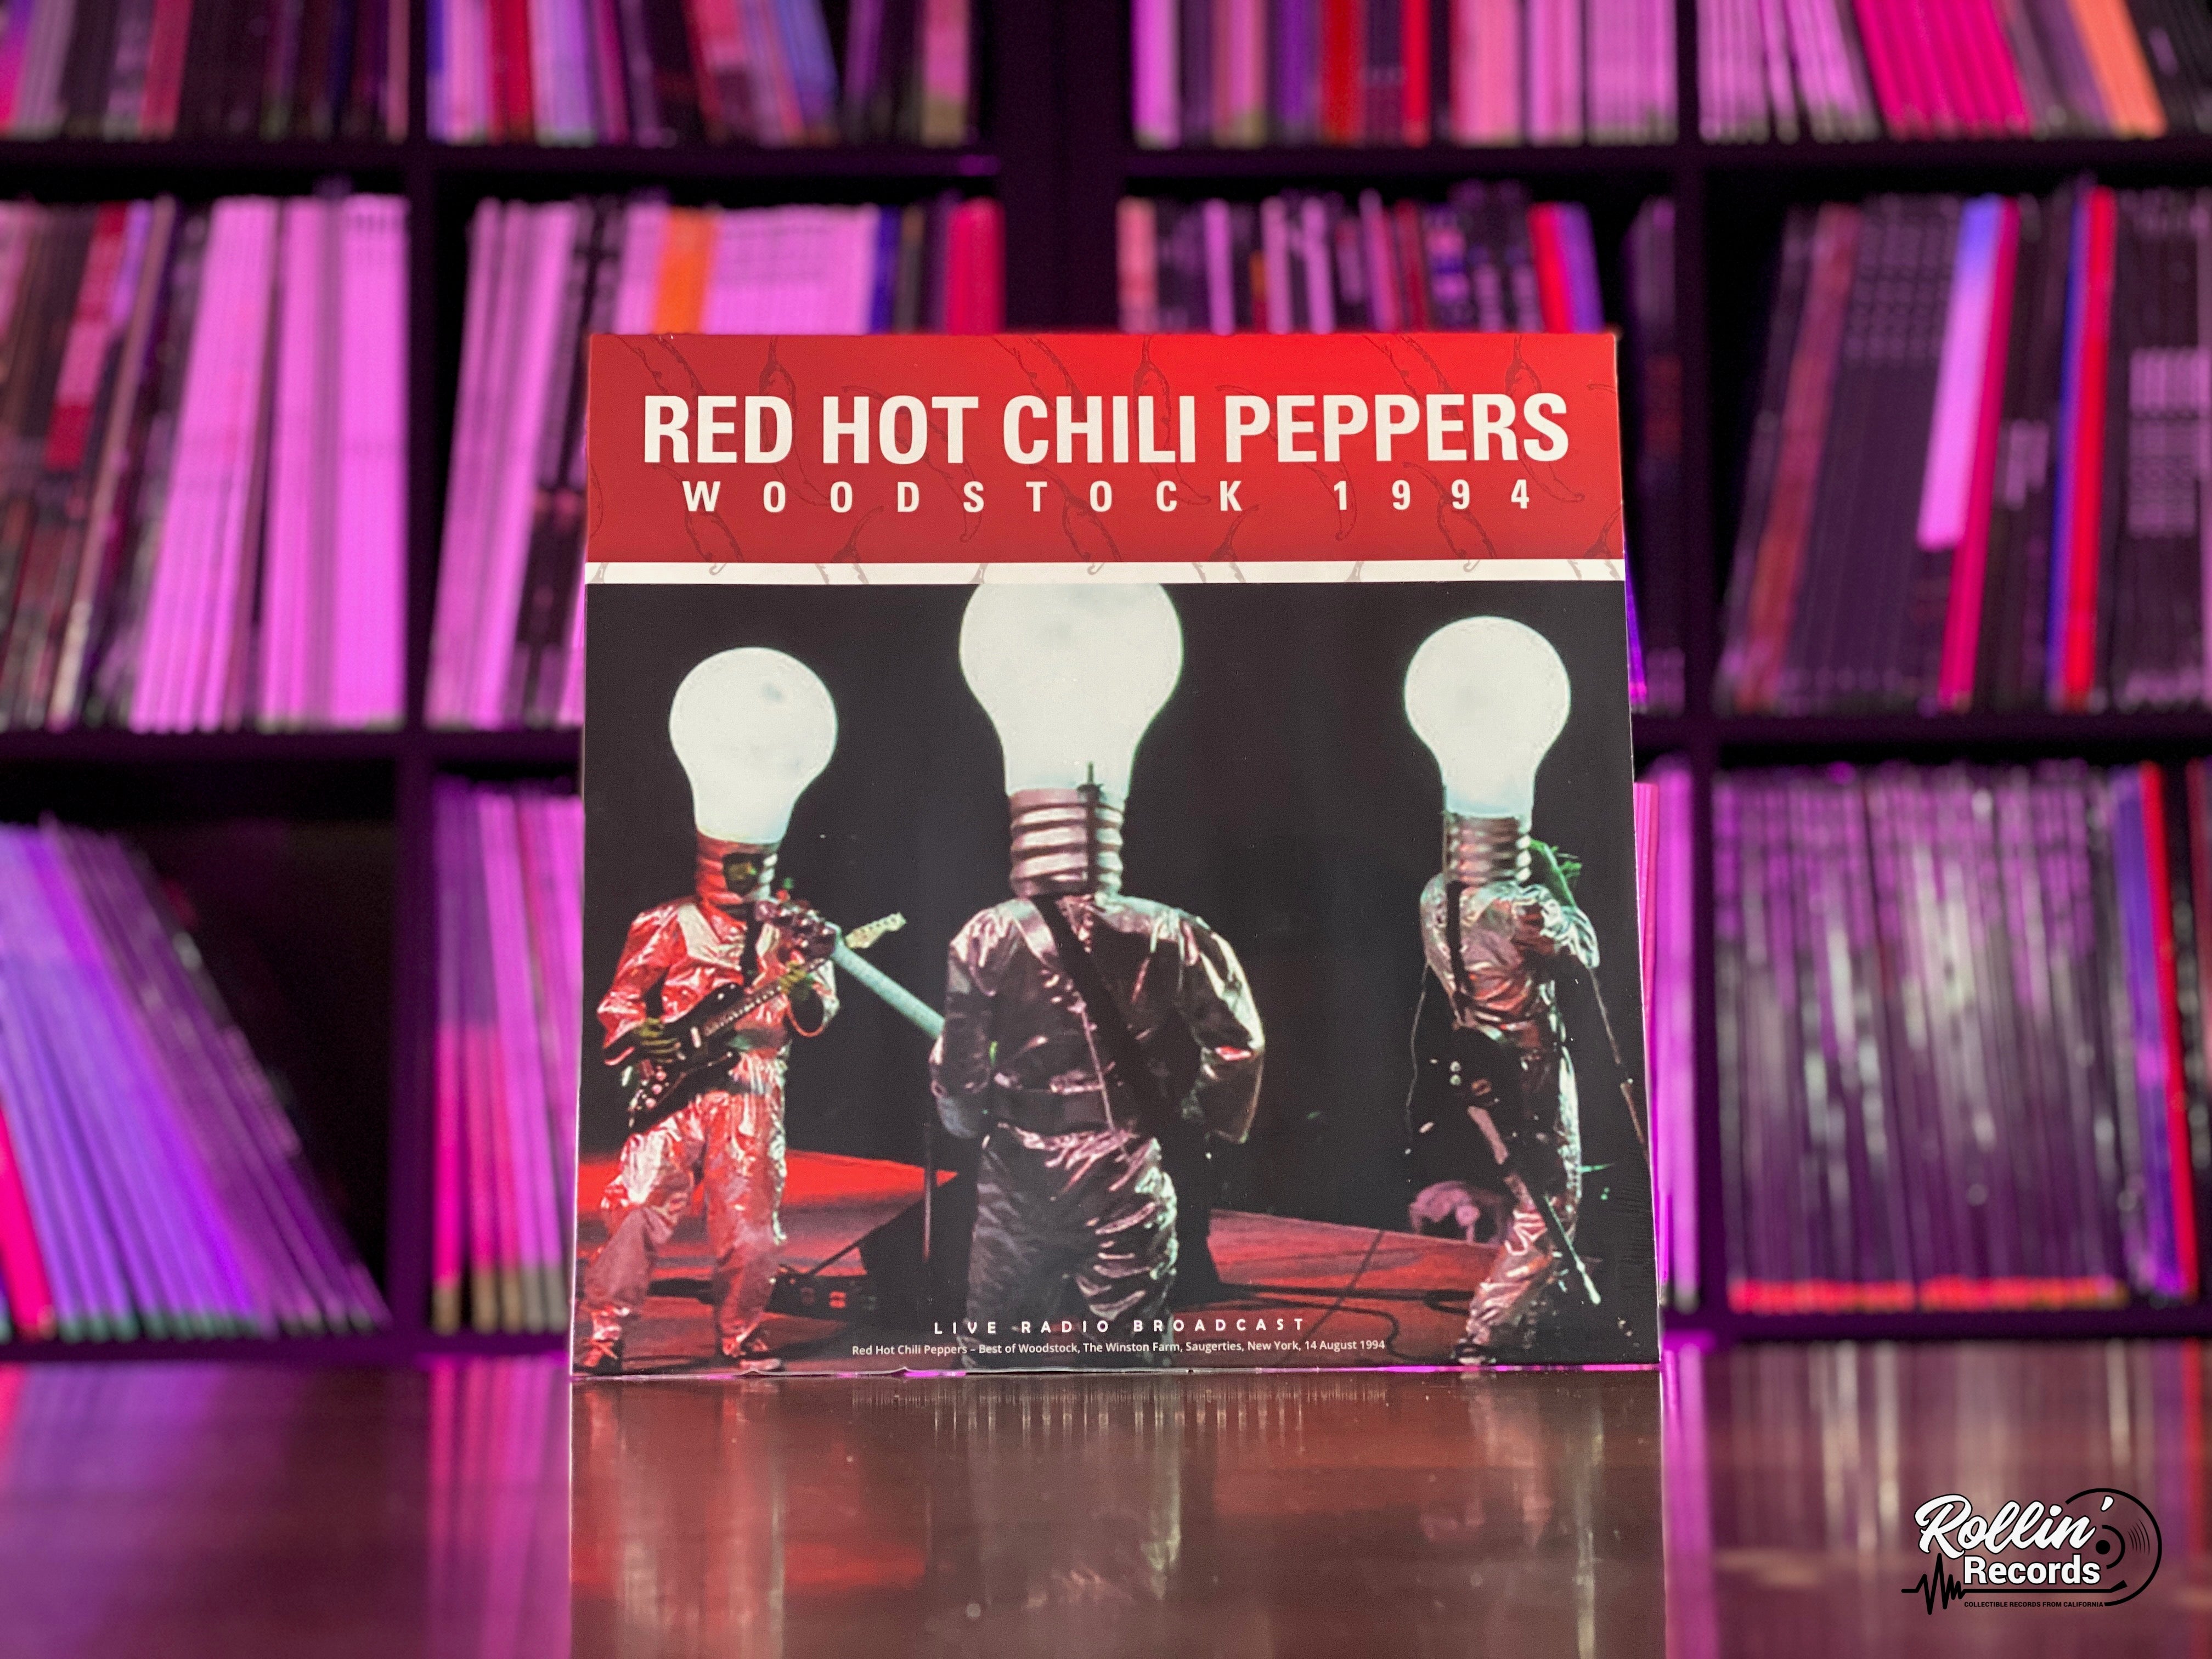 hele lærer Kontur Red Hot Chili Peppers - Best of Woodstock 1994 – Rollin' Records